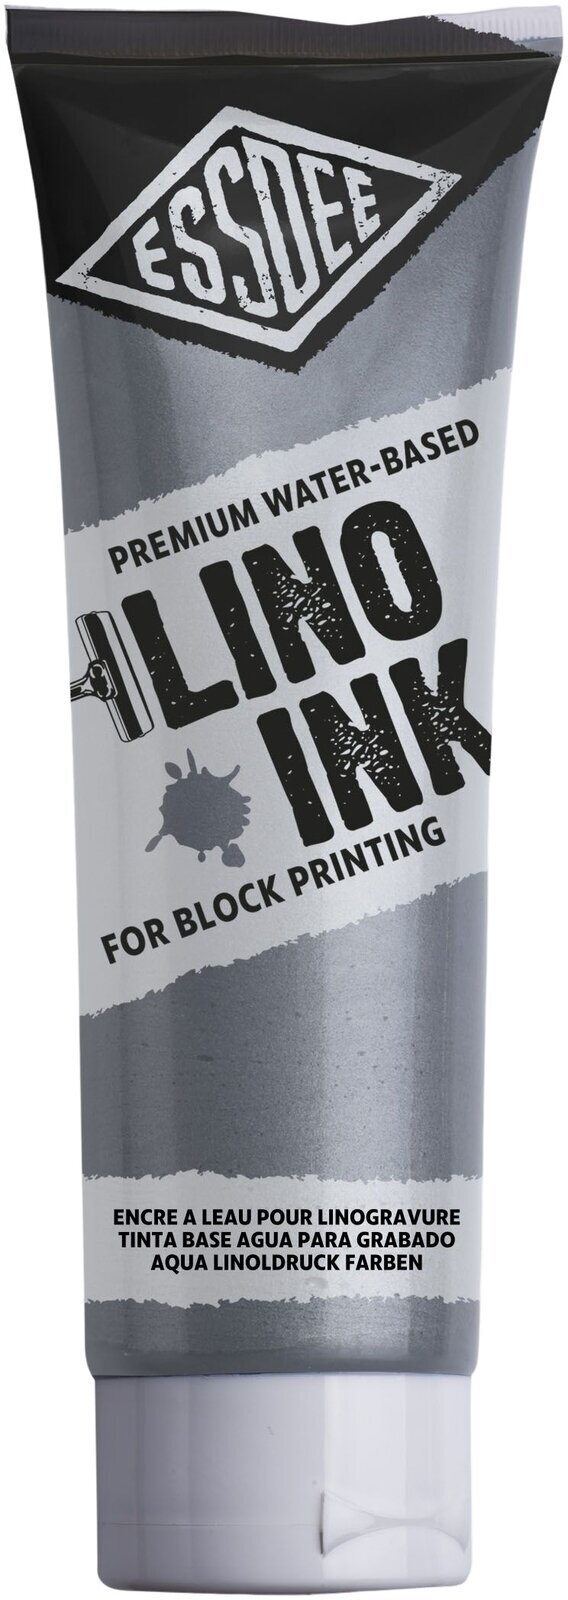 Paint For Linocut Essdee Block Printing Ink Paint For Linocut Metallic Silver 300 ml